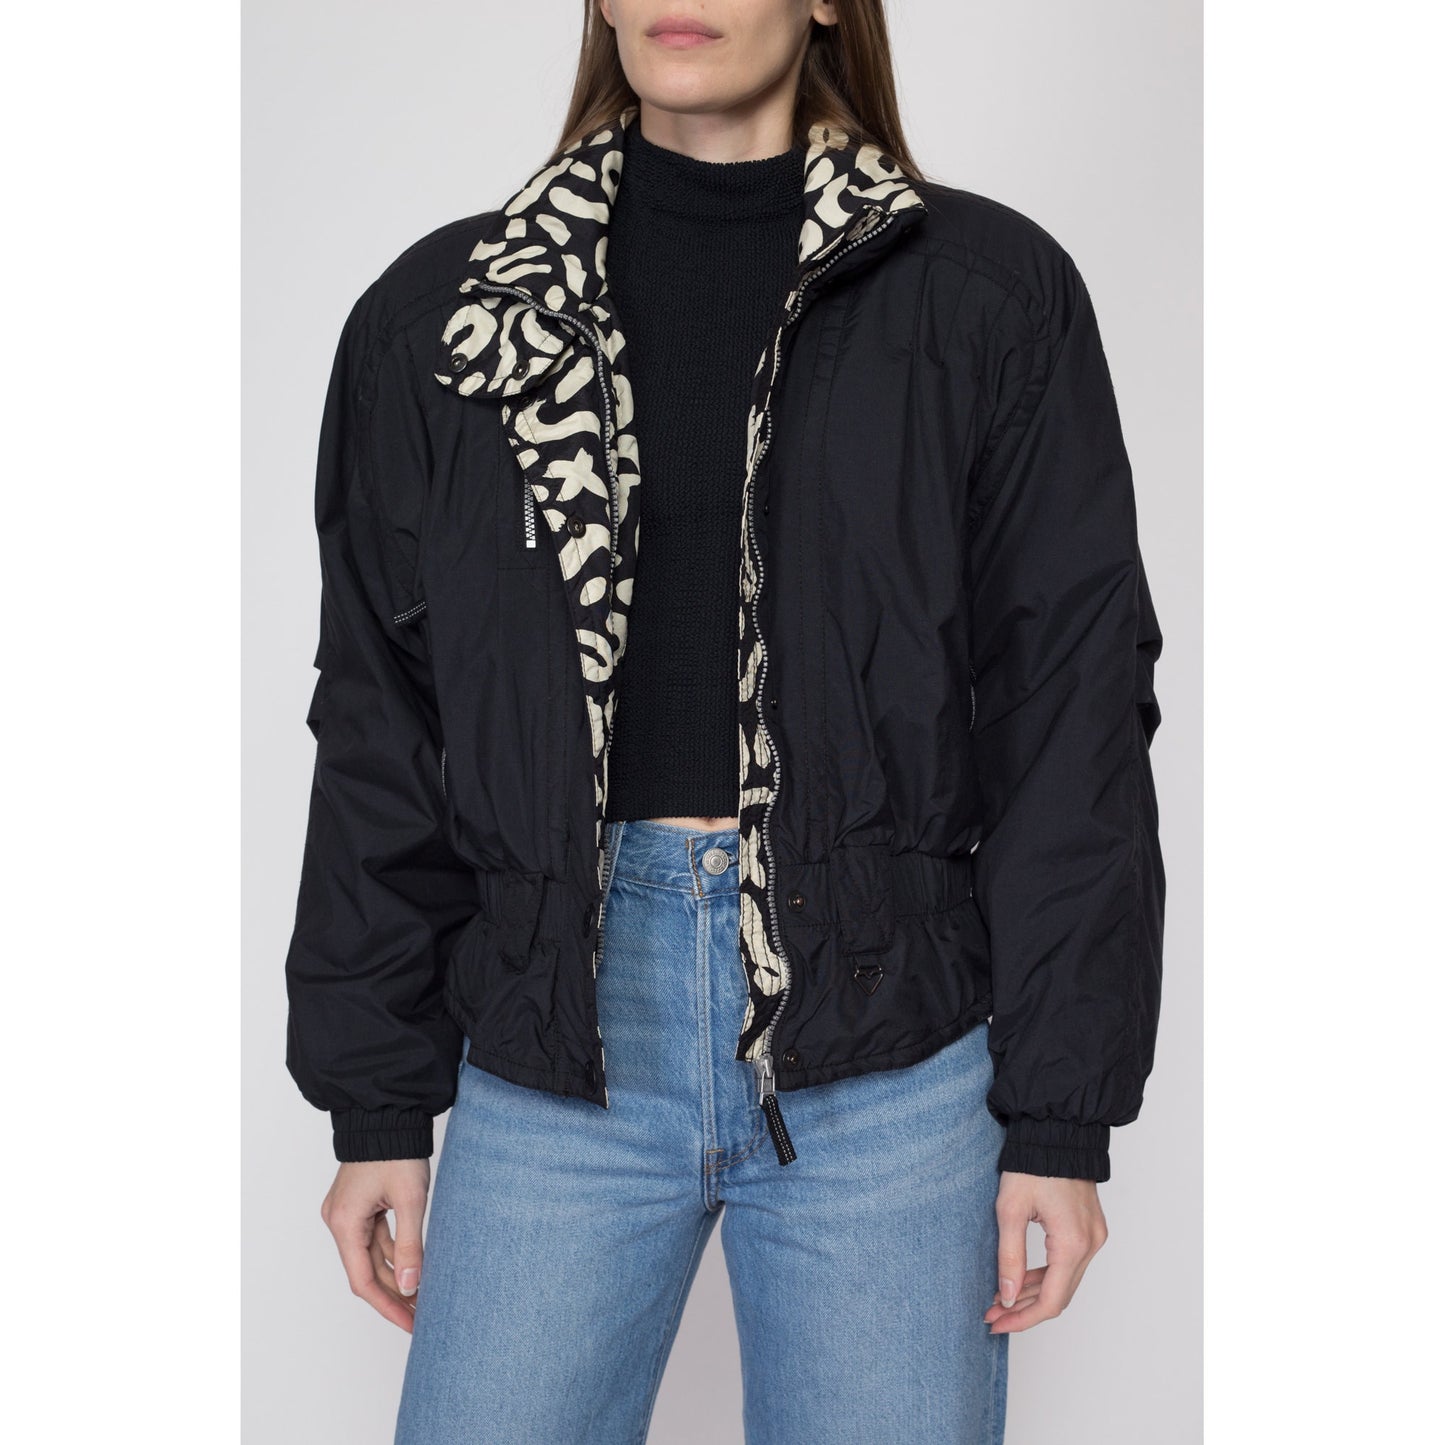 Medium 80s Black & White Obermeyer Ski Jacket | Vintage Zip Up Winter Puffy Coat